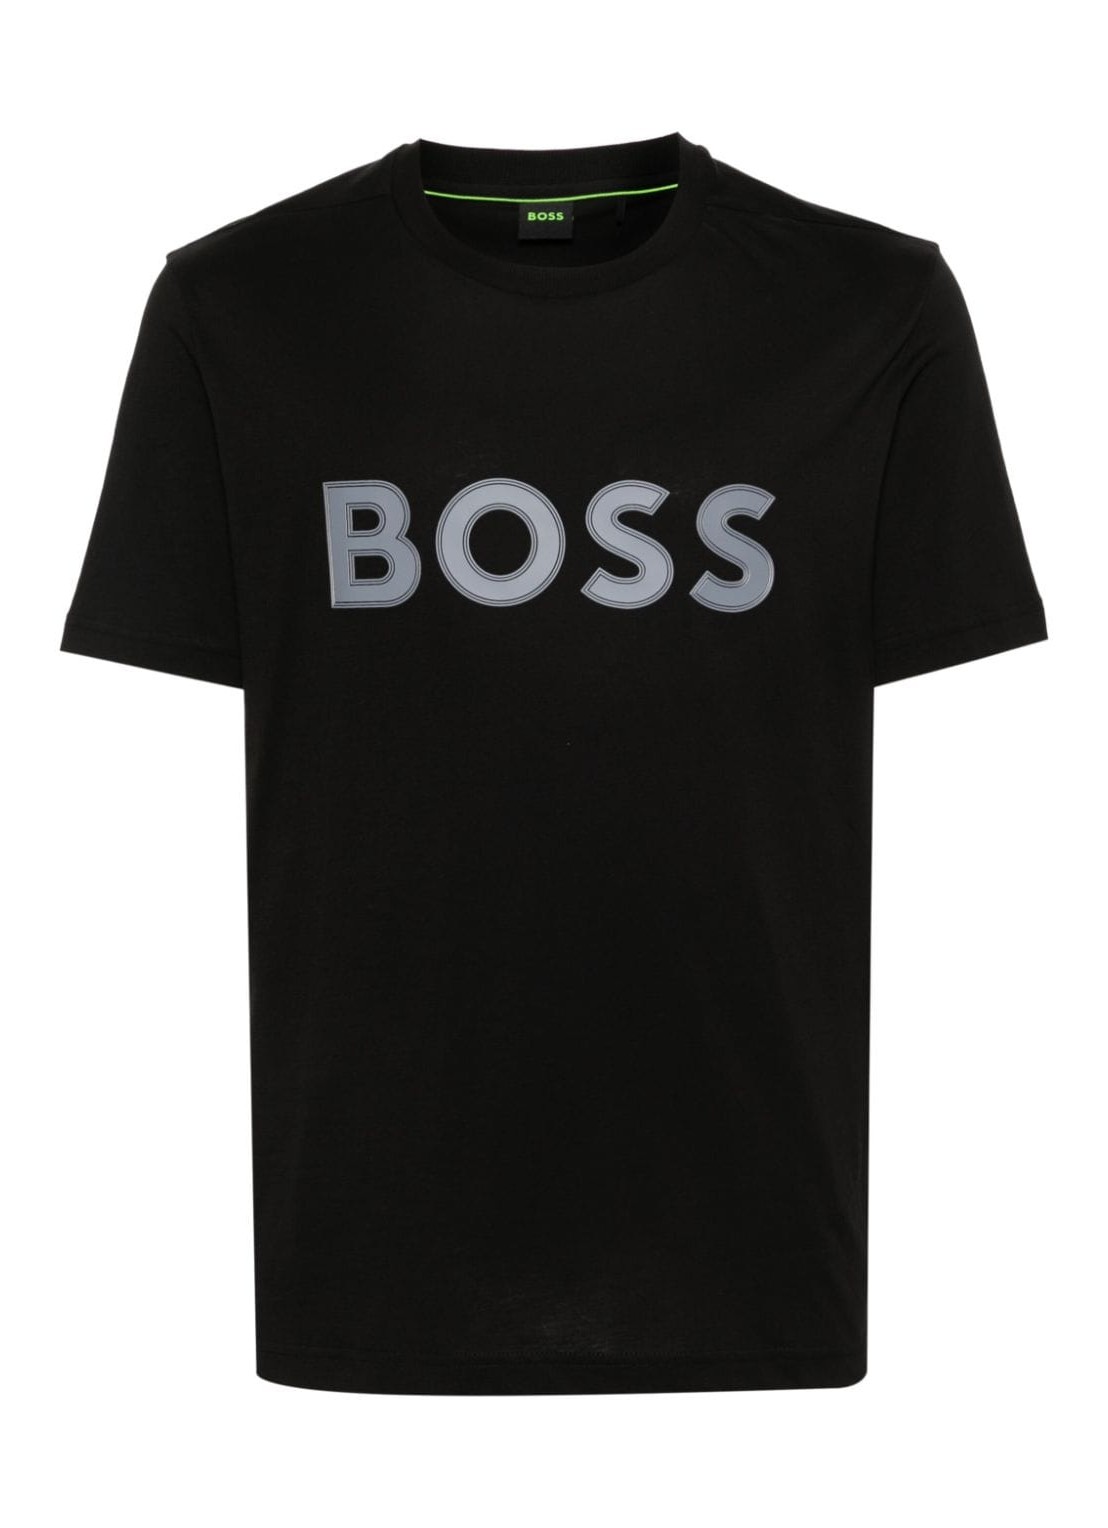 Camiseta boss t-shirt man tee 1 50506344 001 talla 3XL
 